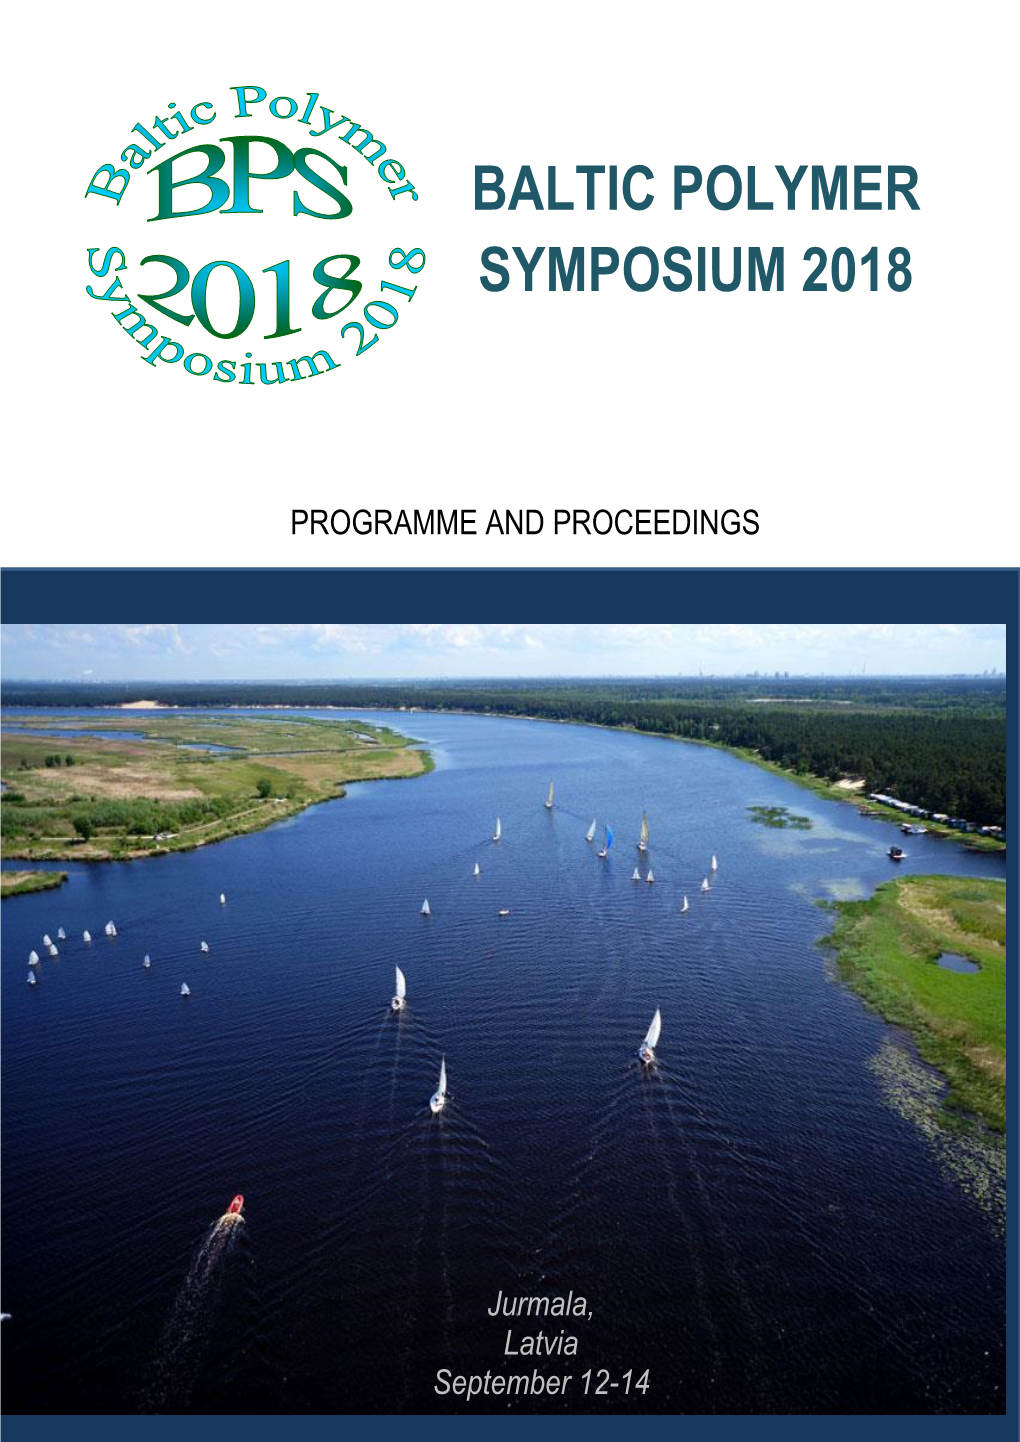 BALTIC POLYMER SYMPOSIUM 2018 Plenary Presentation 13.September